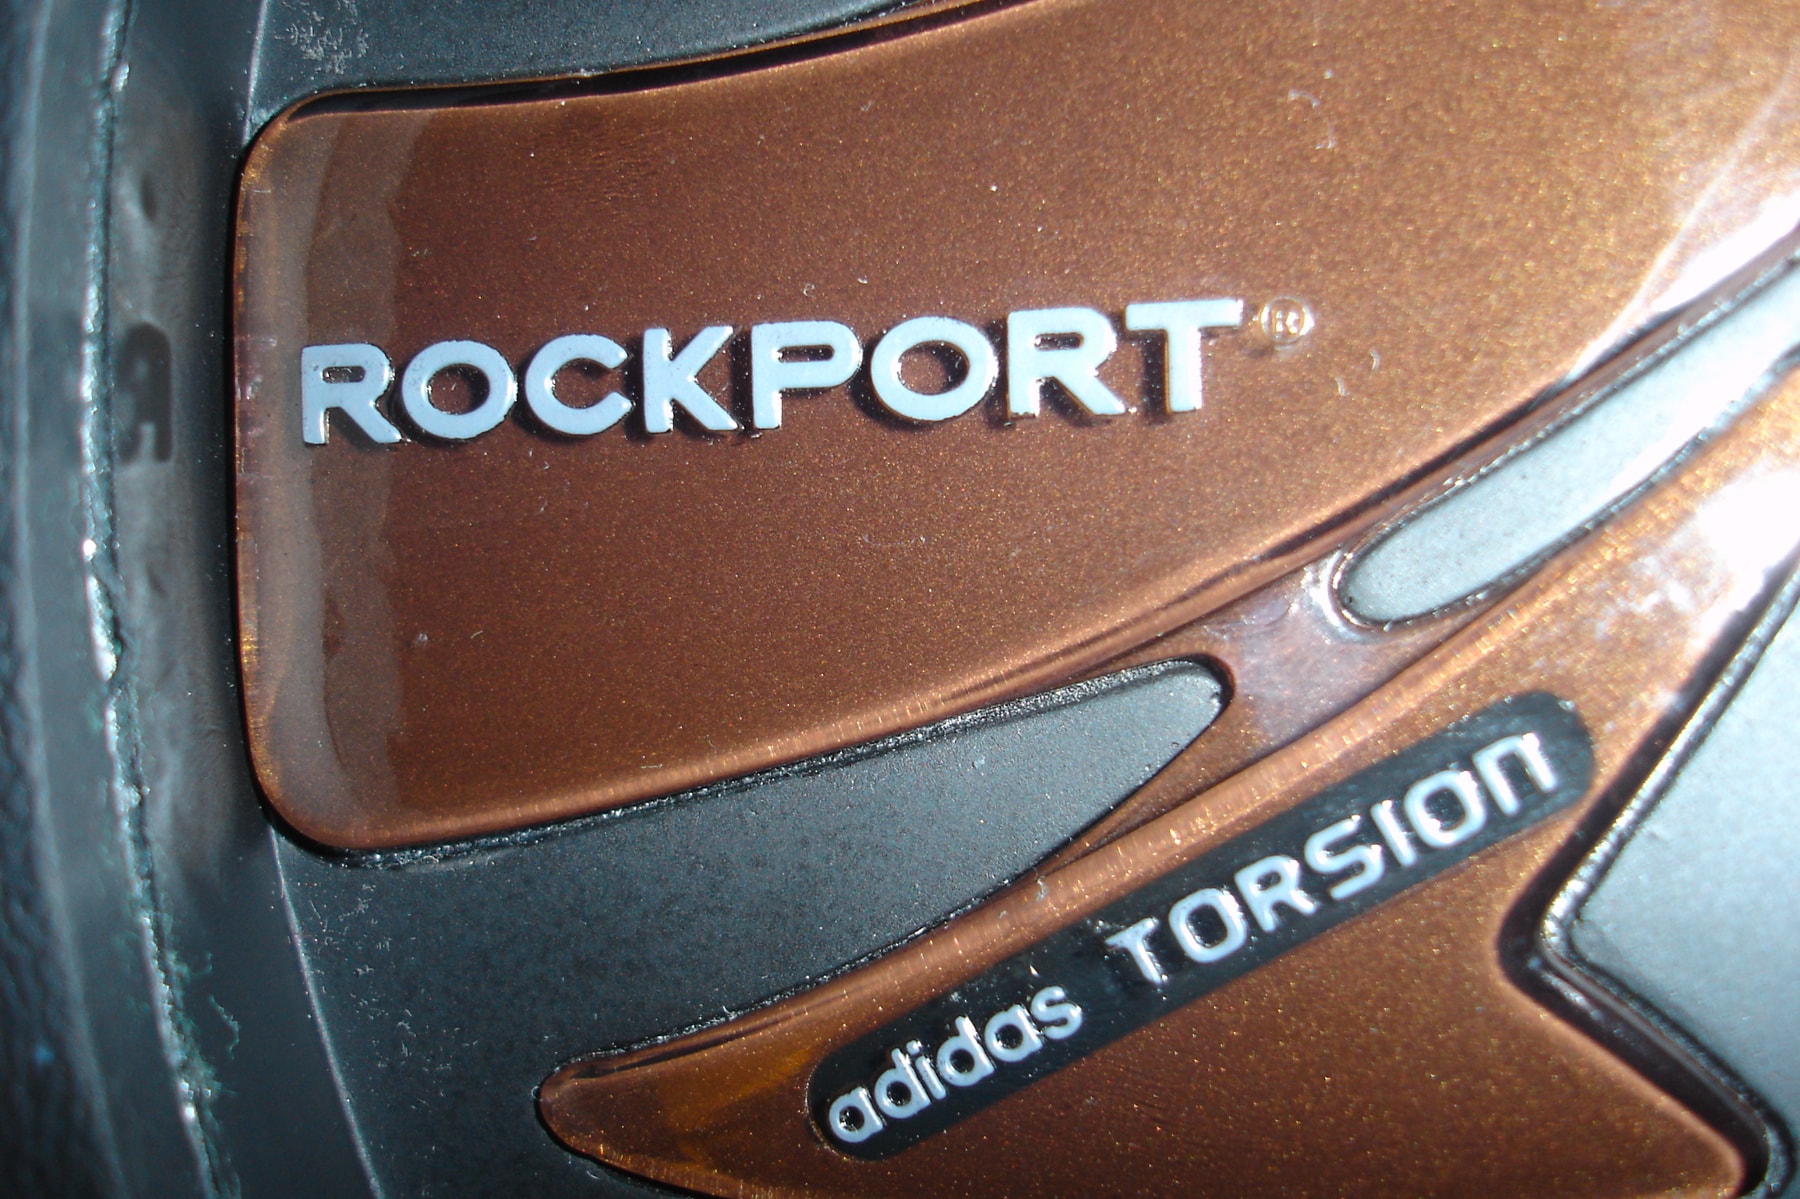 Rockport Bankruptcy adidas Separation split footwear firm operational challenges Paul Kosturos CFO Statement News Details Announcement